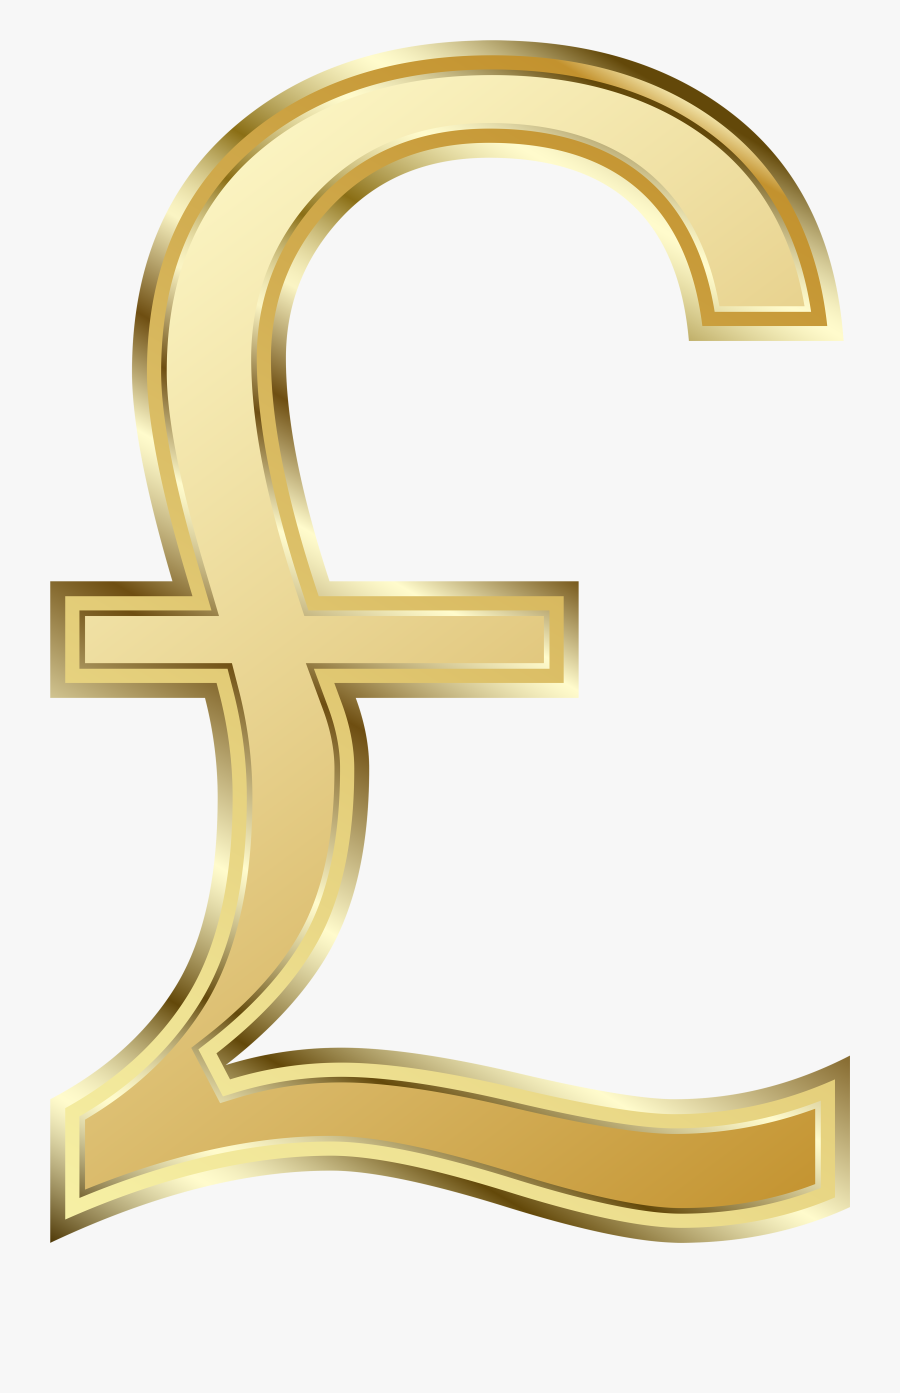 British Pound Symbol Png Clip Art Image - Gold British Pound Sign Png, Transparent Clipart